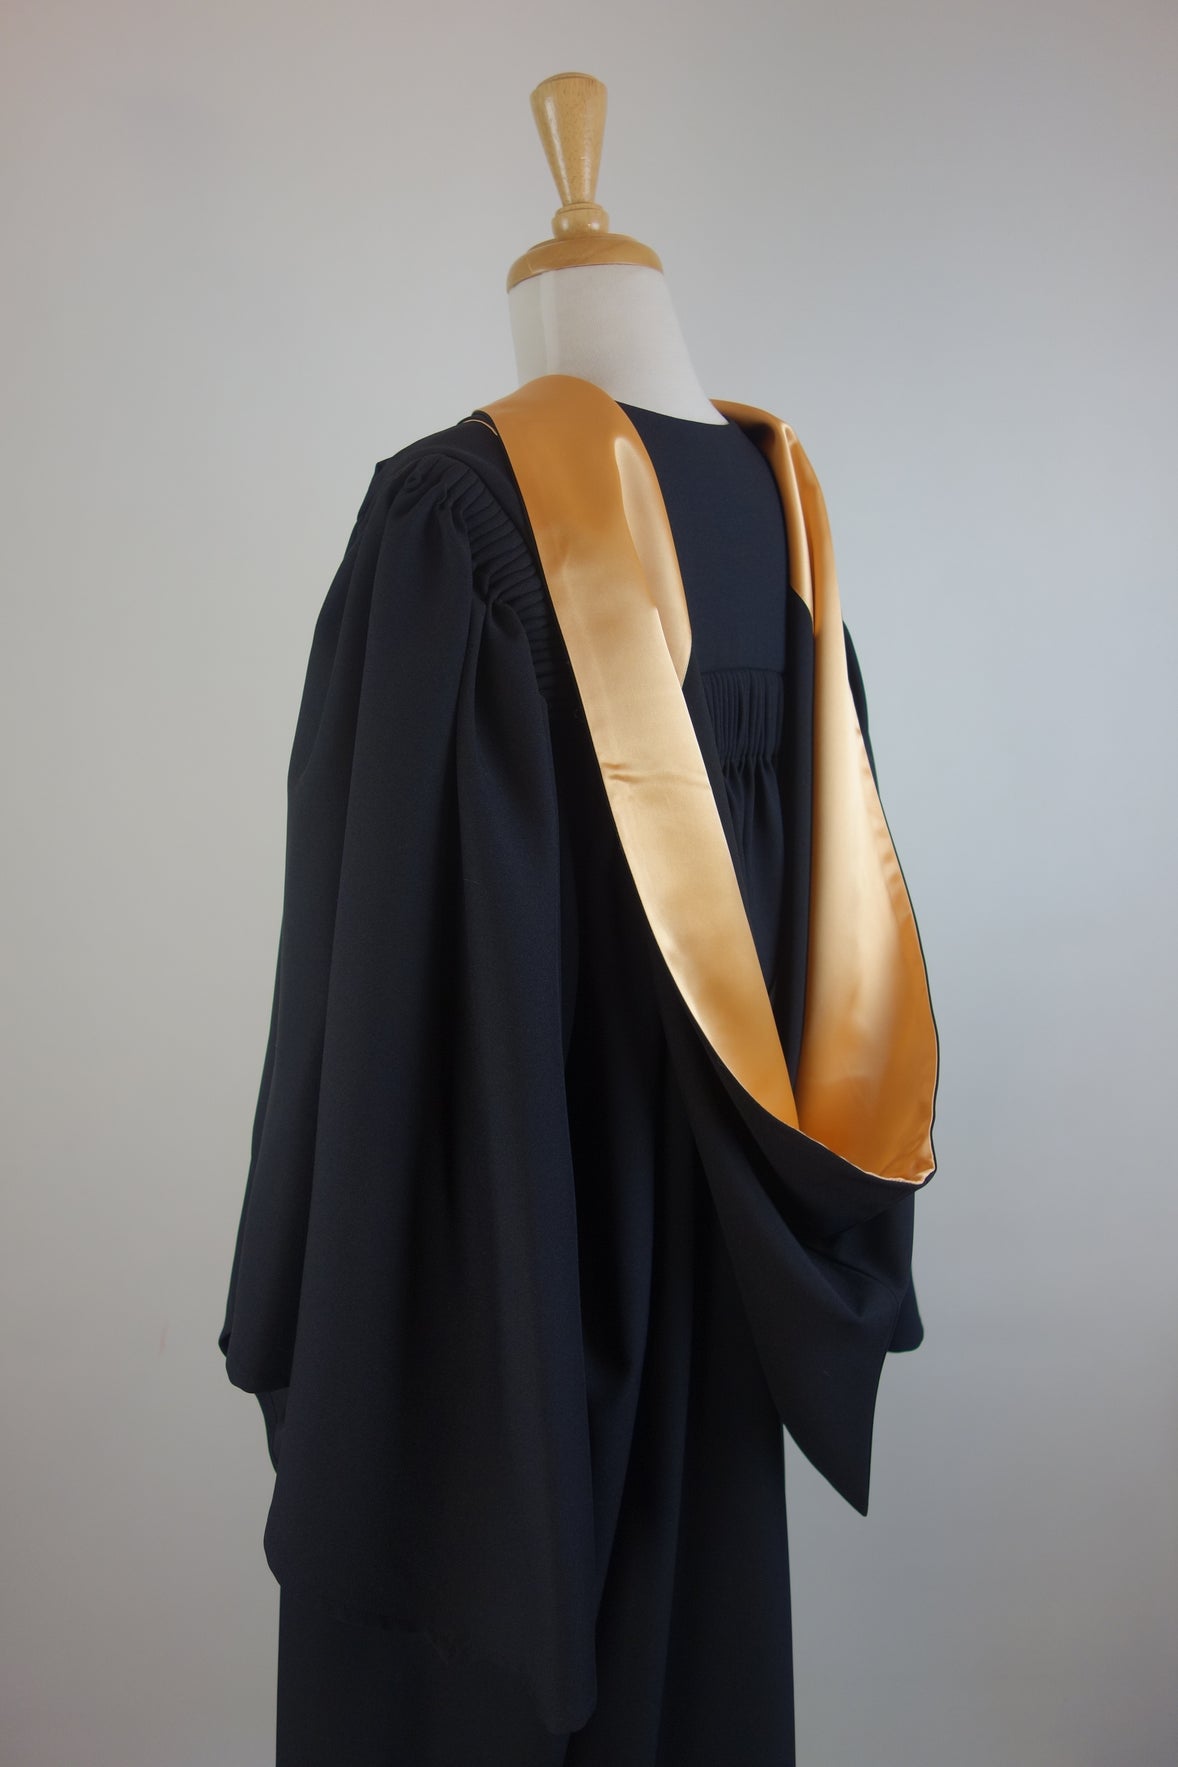 Oxford Style, Half Lined Academic Hood